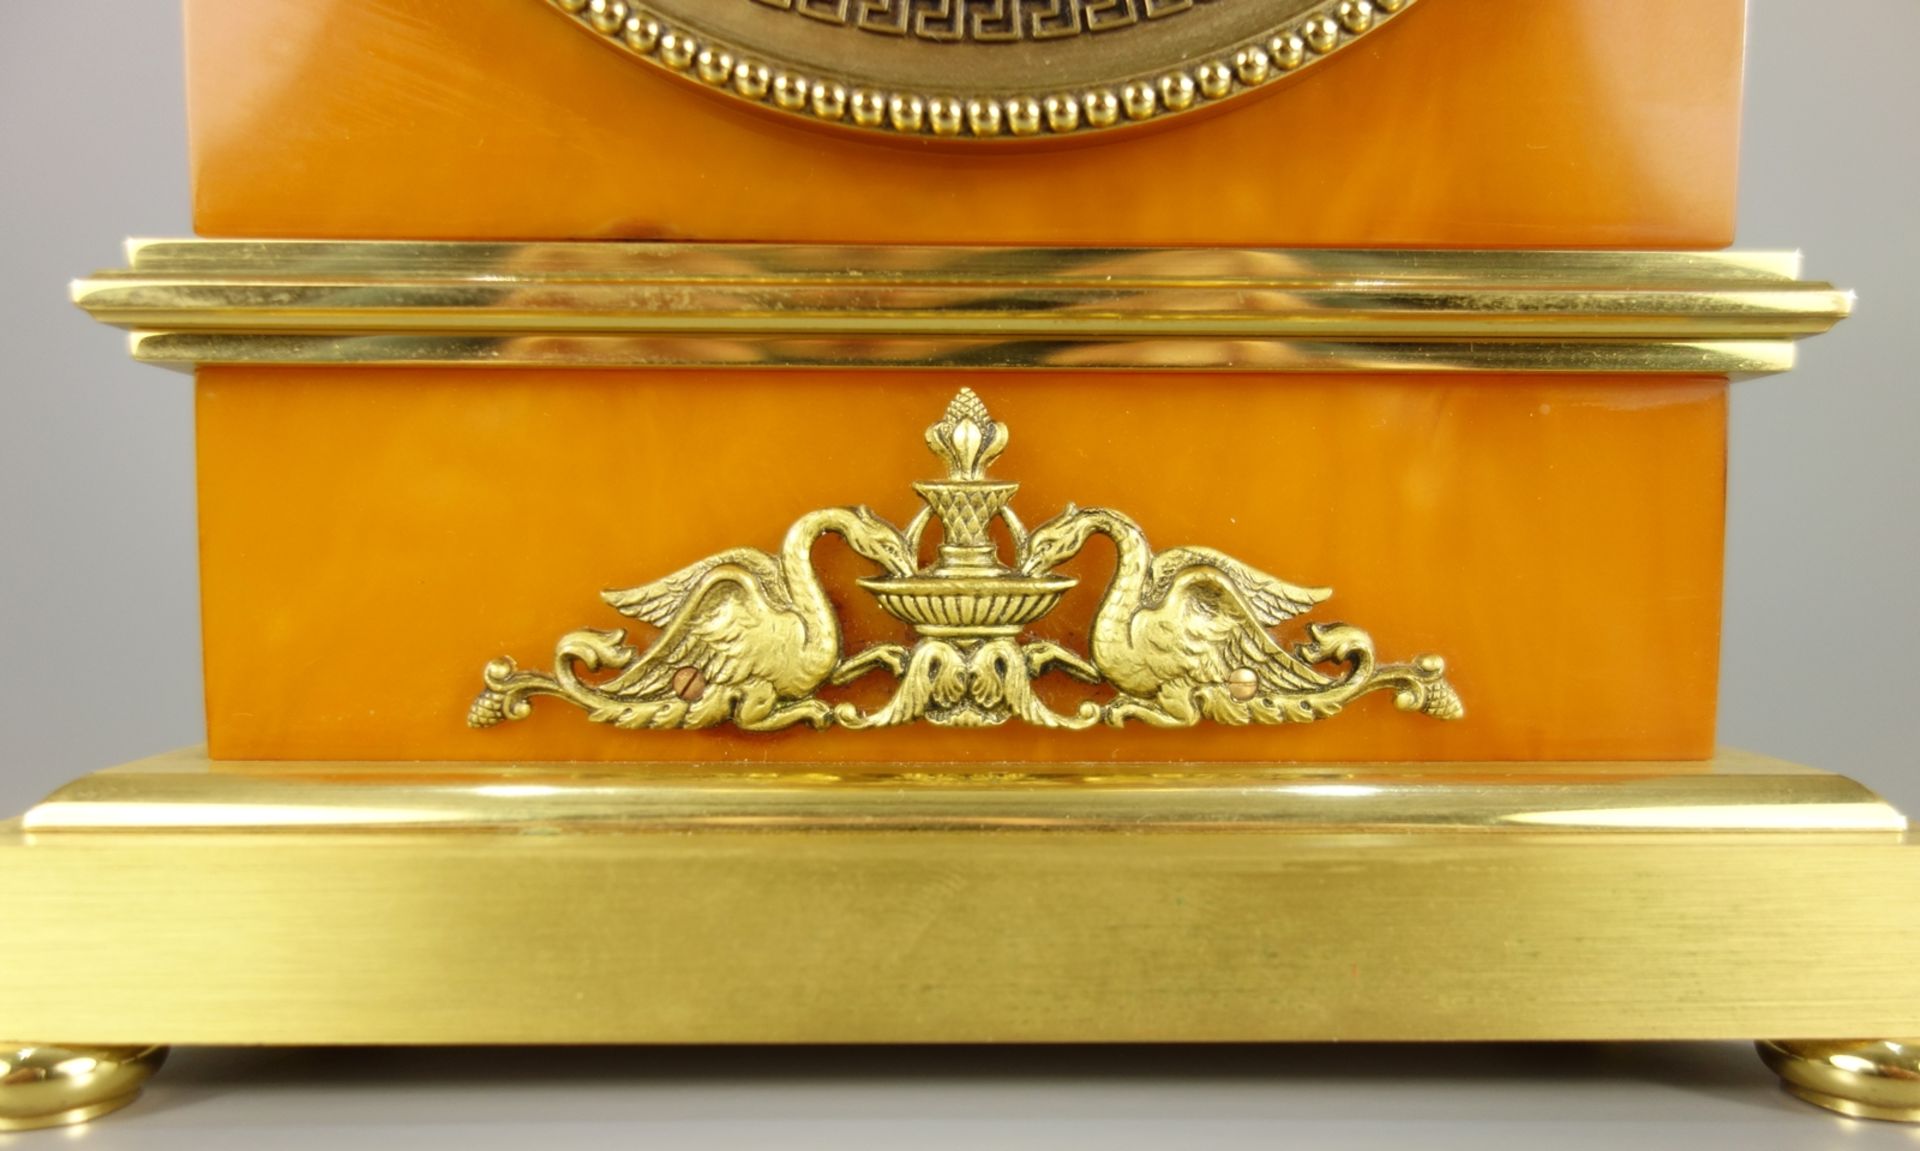 Tischuhr, Jaeger-LeCoultre, 8-Tage-Uhr im Empirestil, um 1968-70, Nr. 496, HBT:18,7*14,2*6,3cm, - Bild 3 aus 4